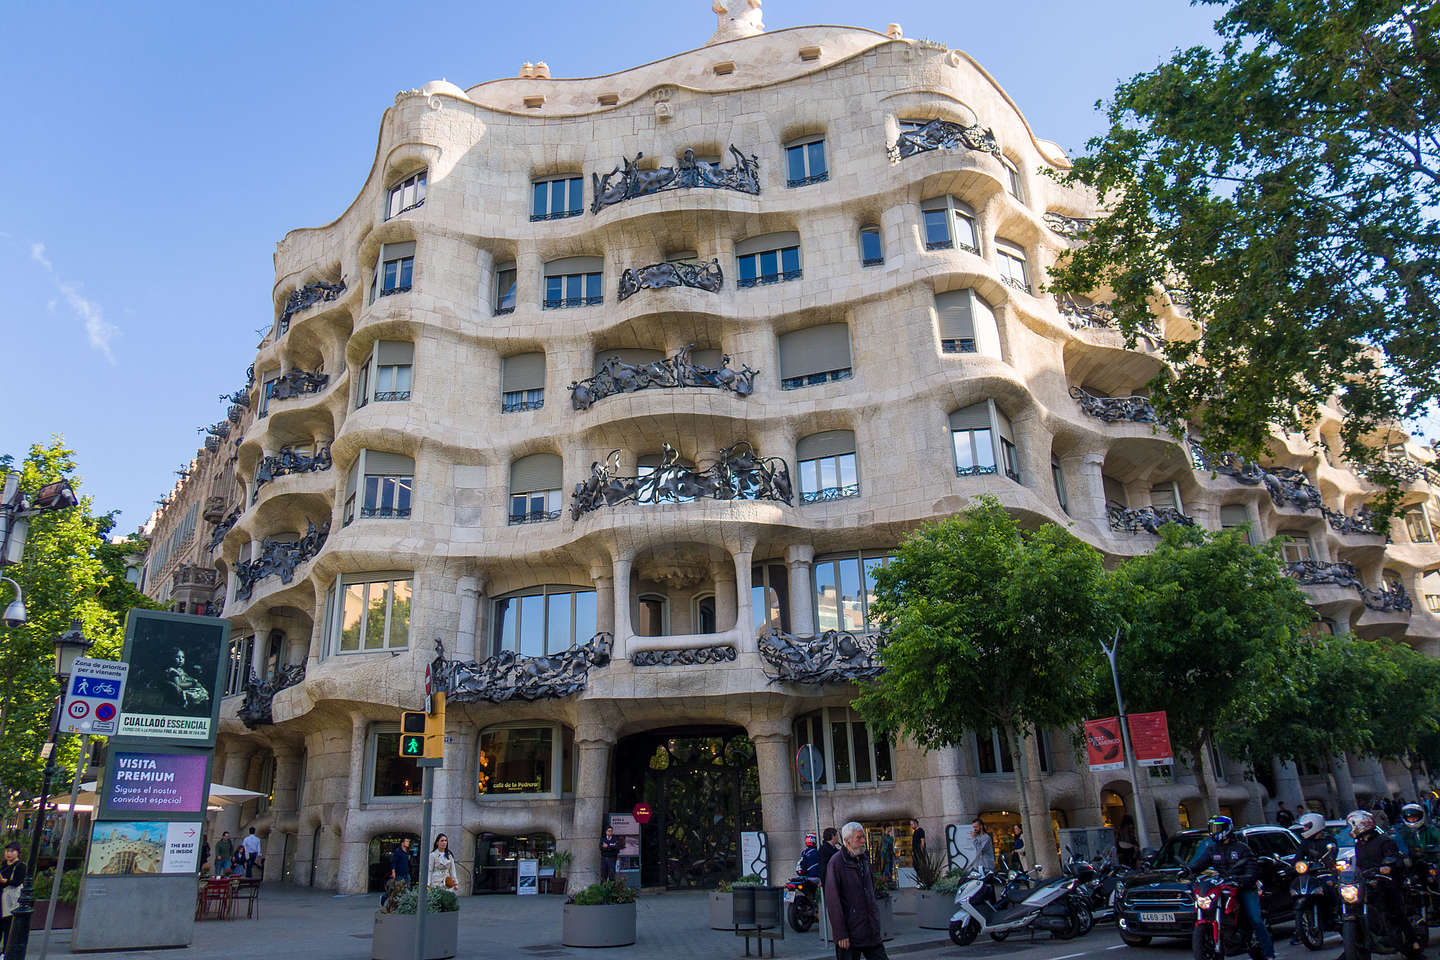 Gaudi's Casa Mila (La Predera)